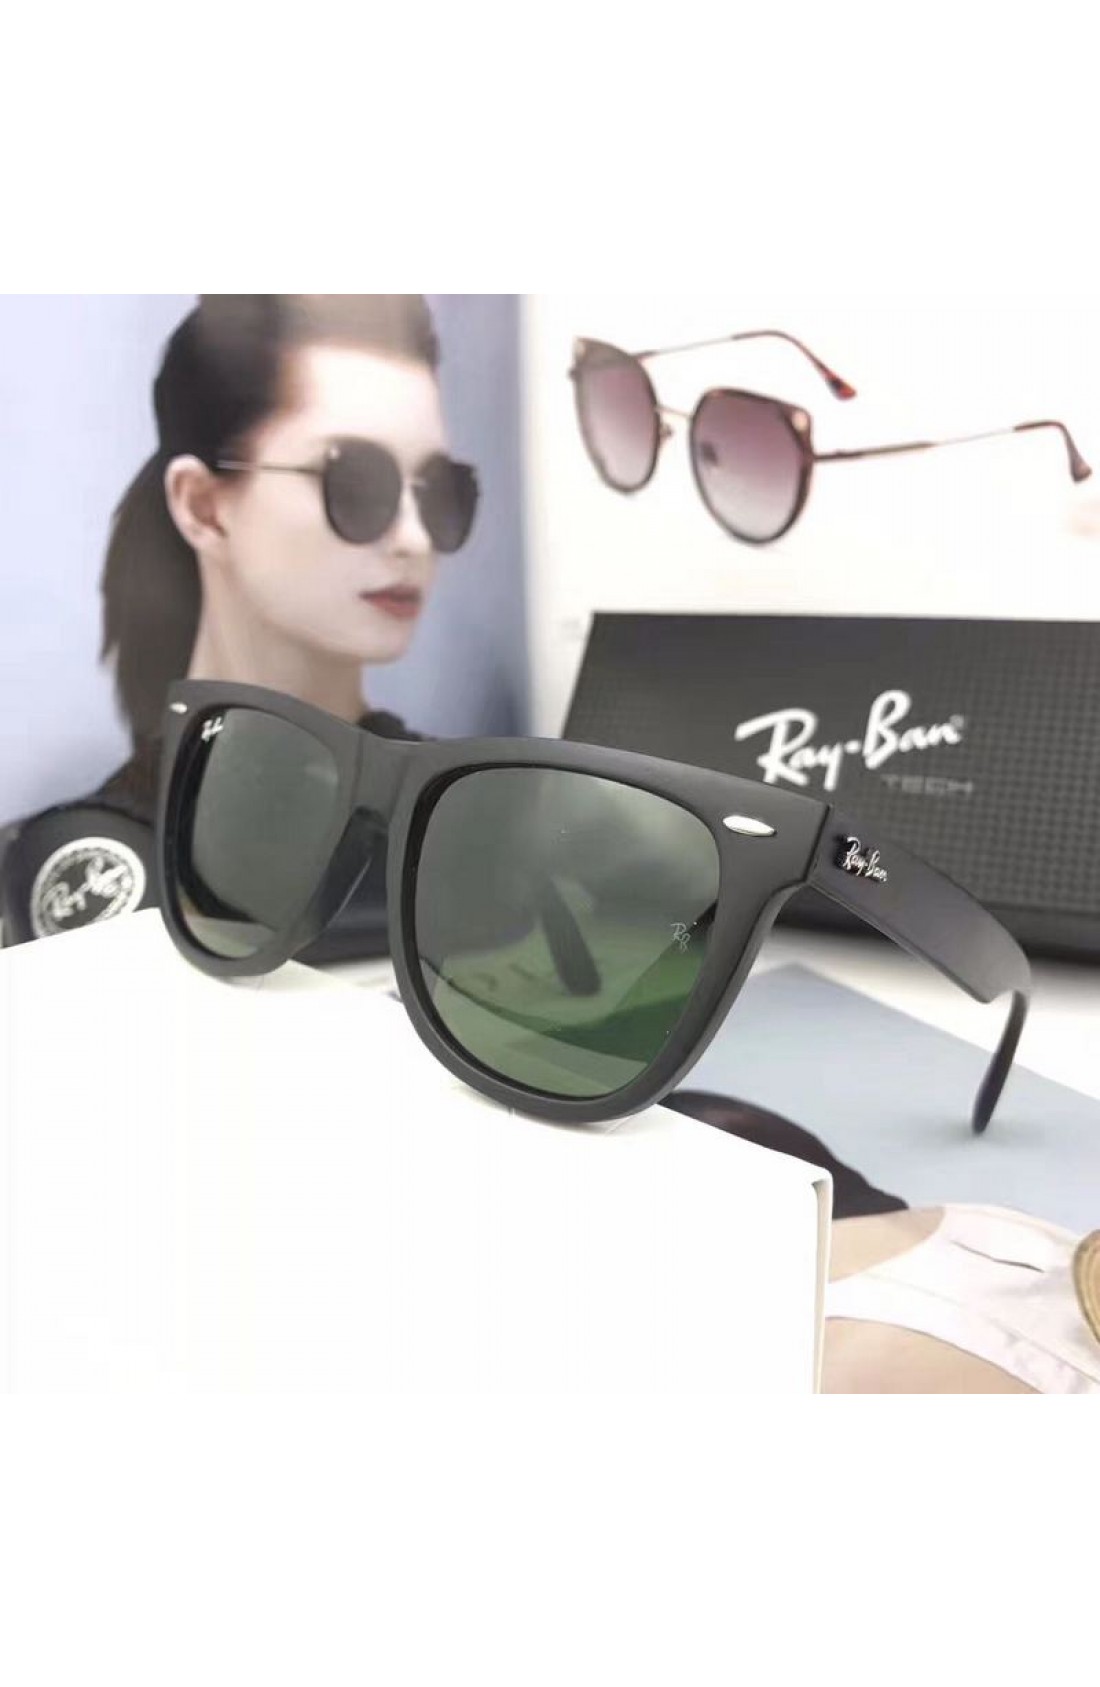 ray ban sunglasses green lens